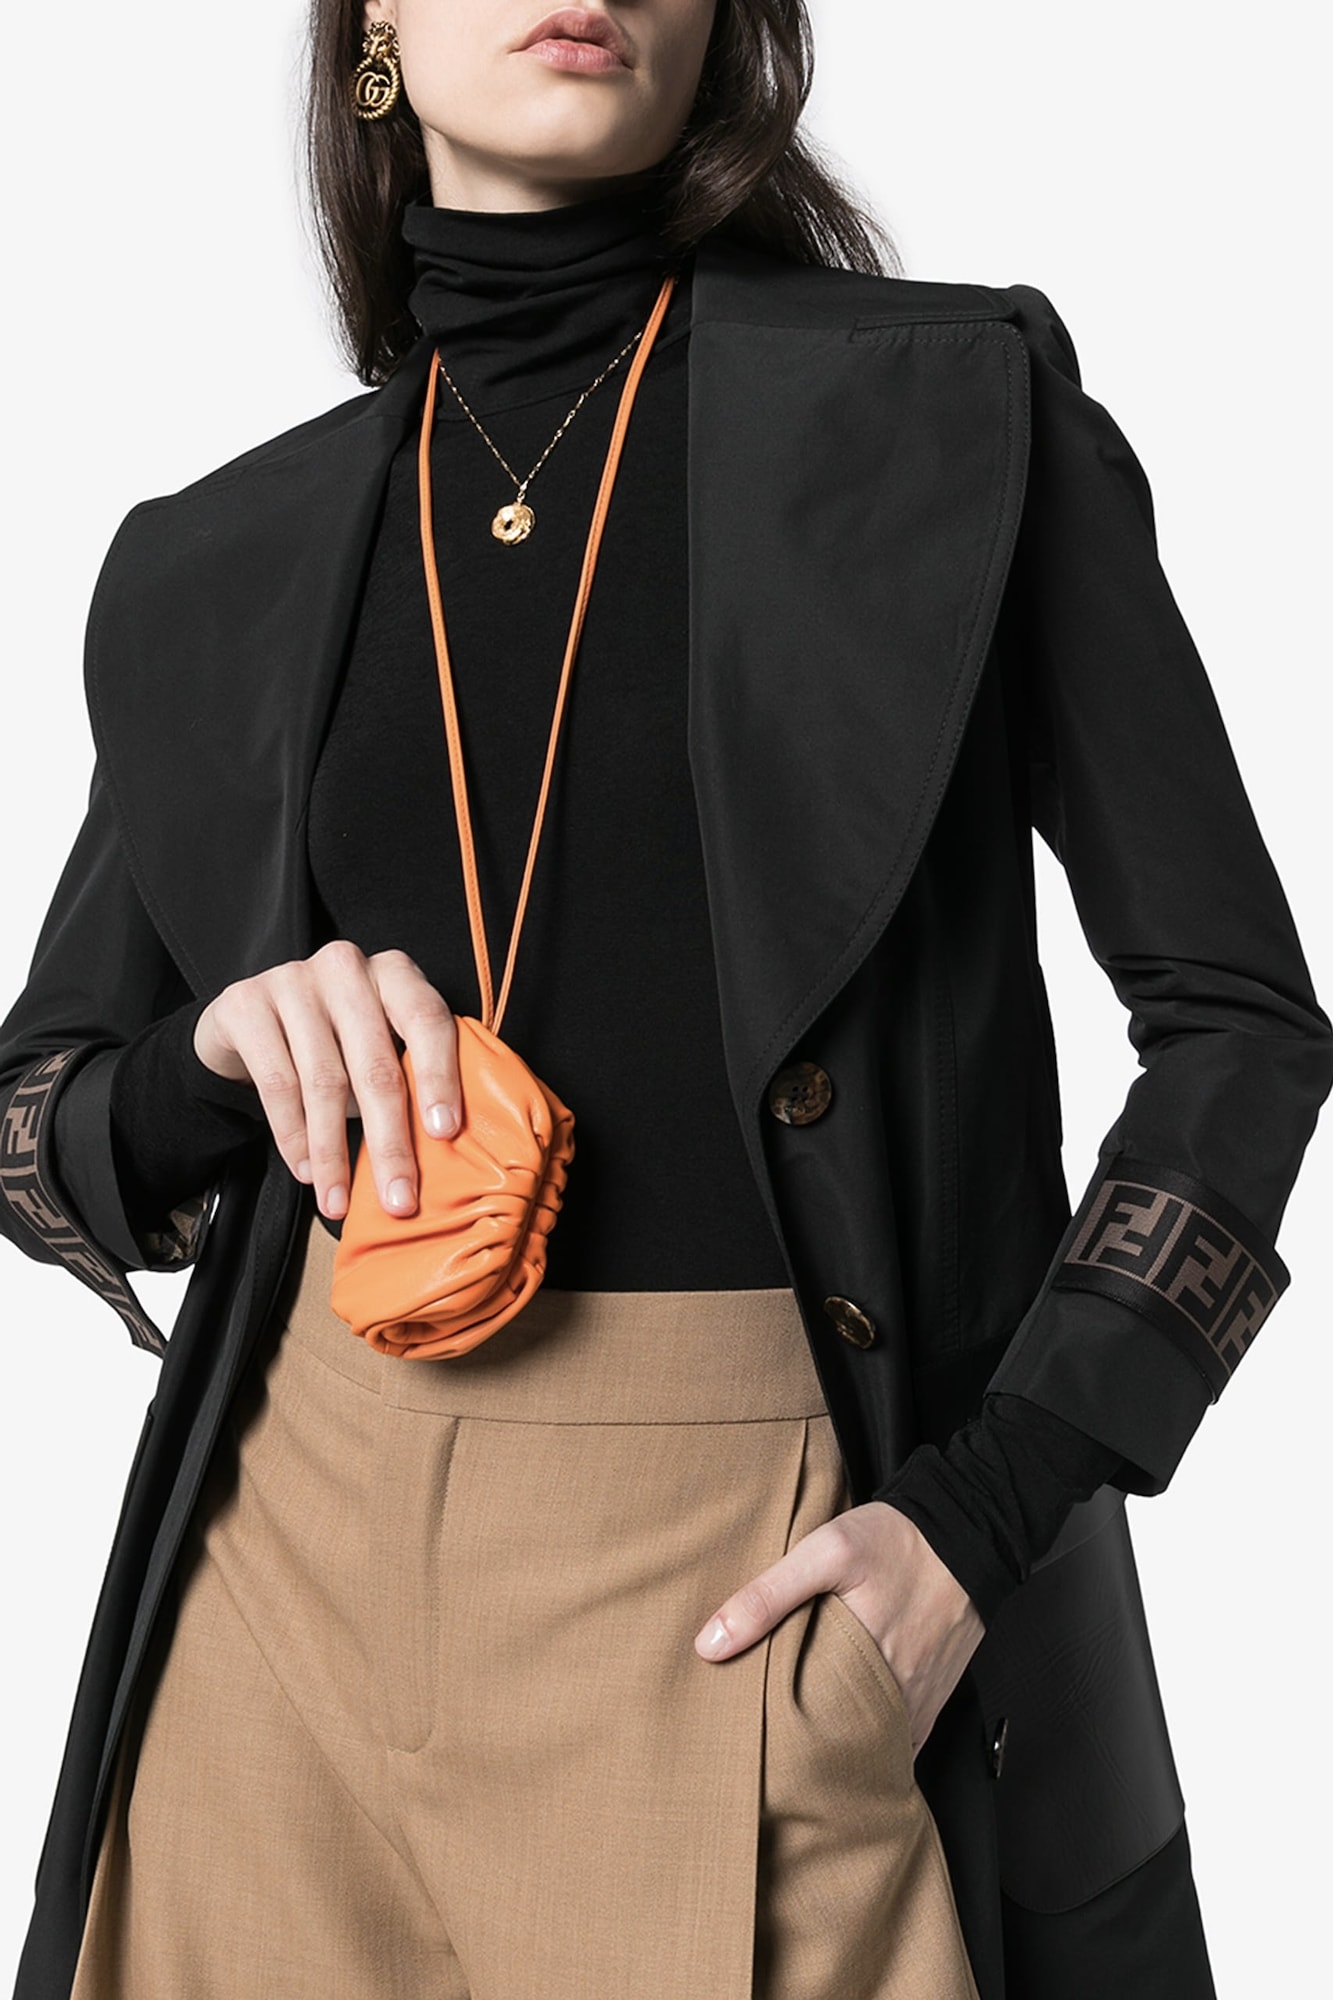 Bottega Veneta Pouch Bag Tiny Accessory Trend Orange Quilted Daniel Lee 